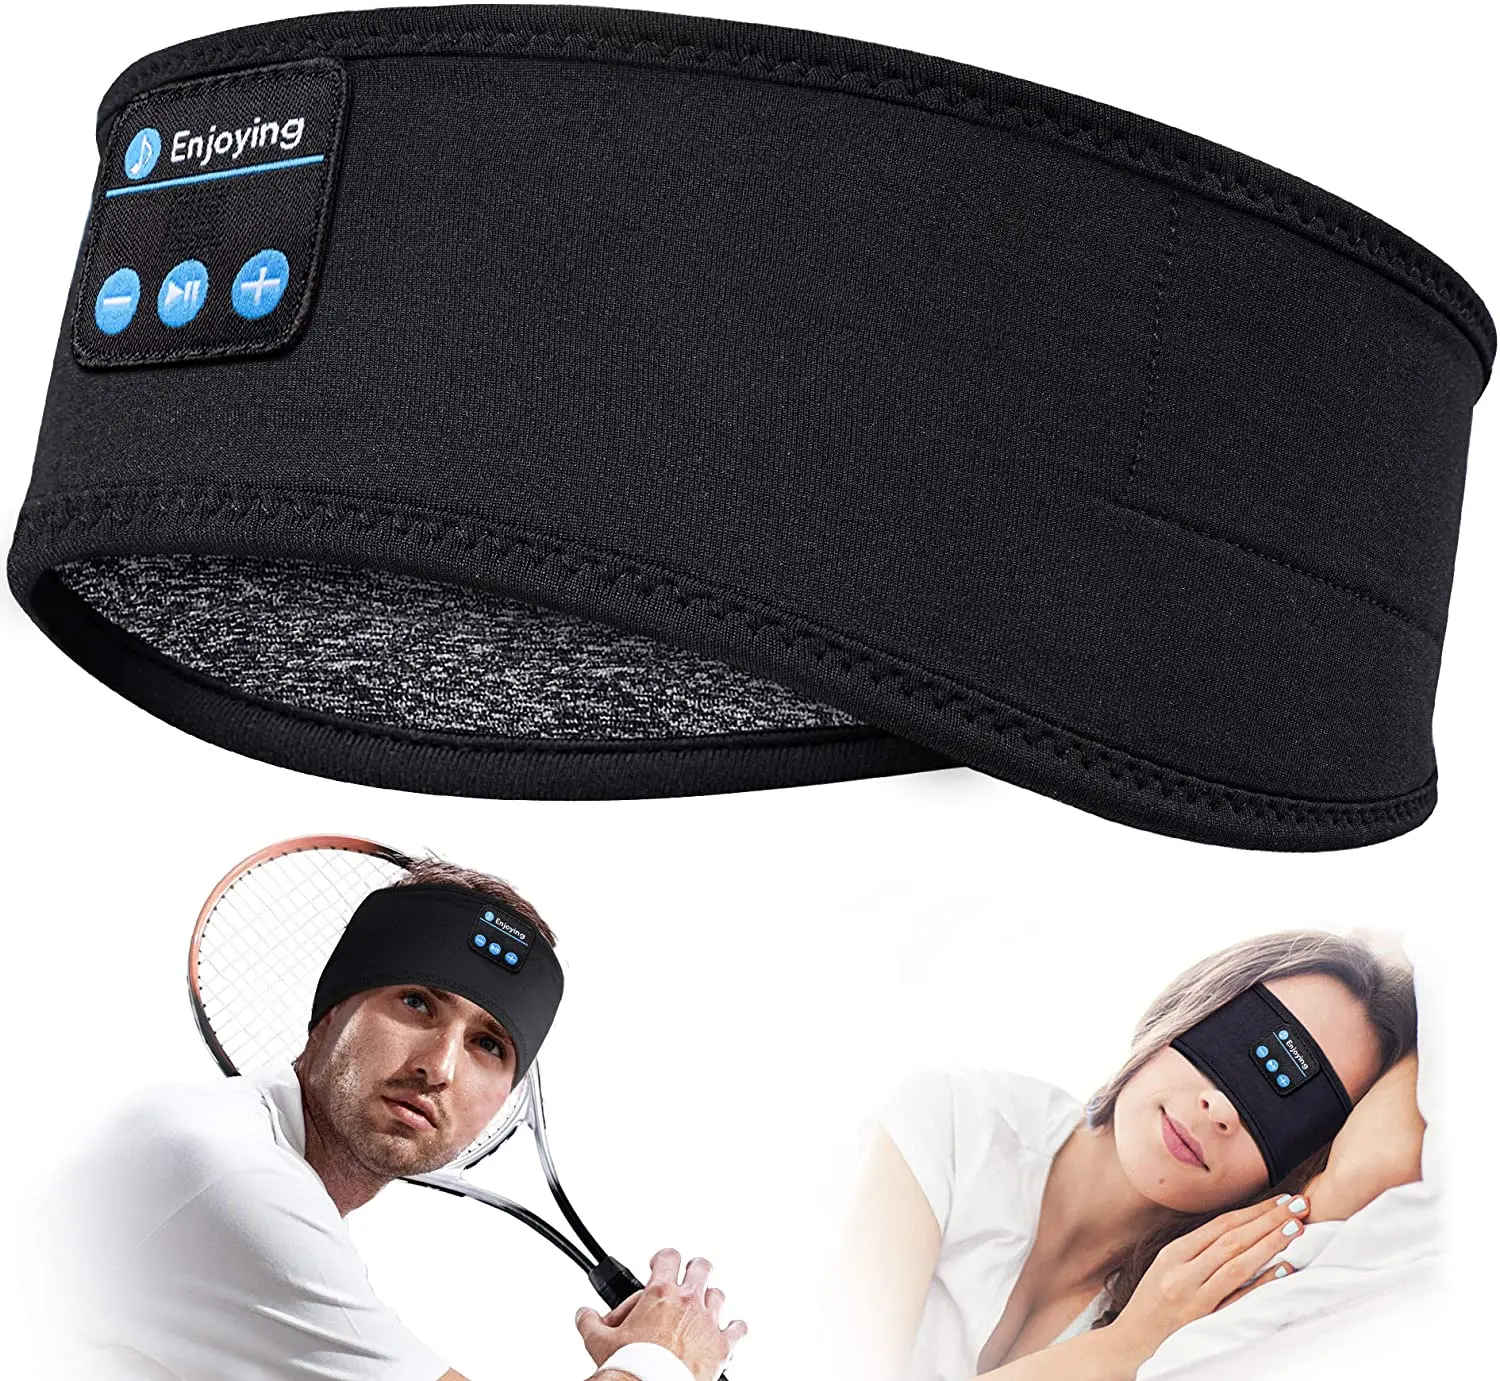 

Universal Wireless Blue tooth Headband Sleep Headset Sports Earphones Headphones for Insomnia Meditation Yoga Workout Running